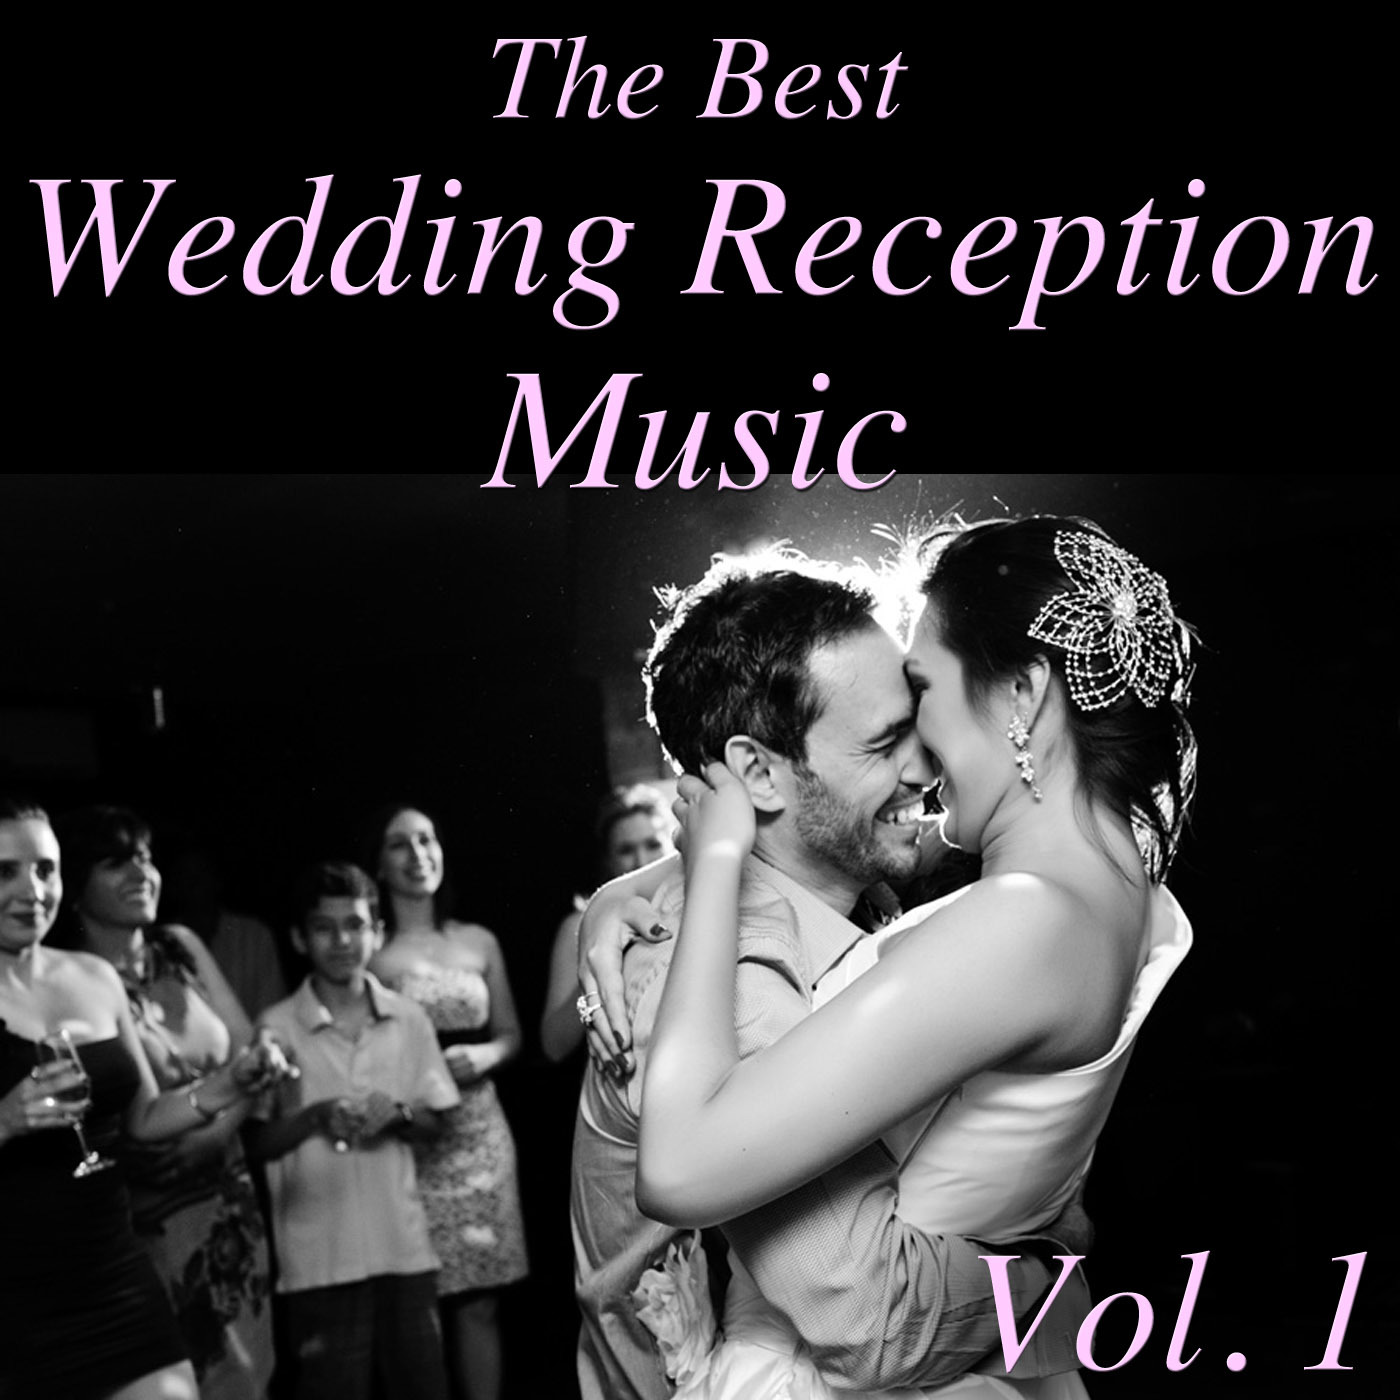 The Best Wedding Reception Music, Vol. 1